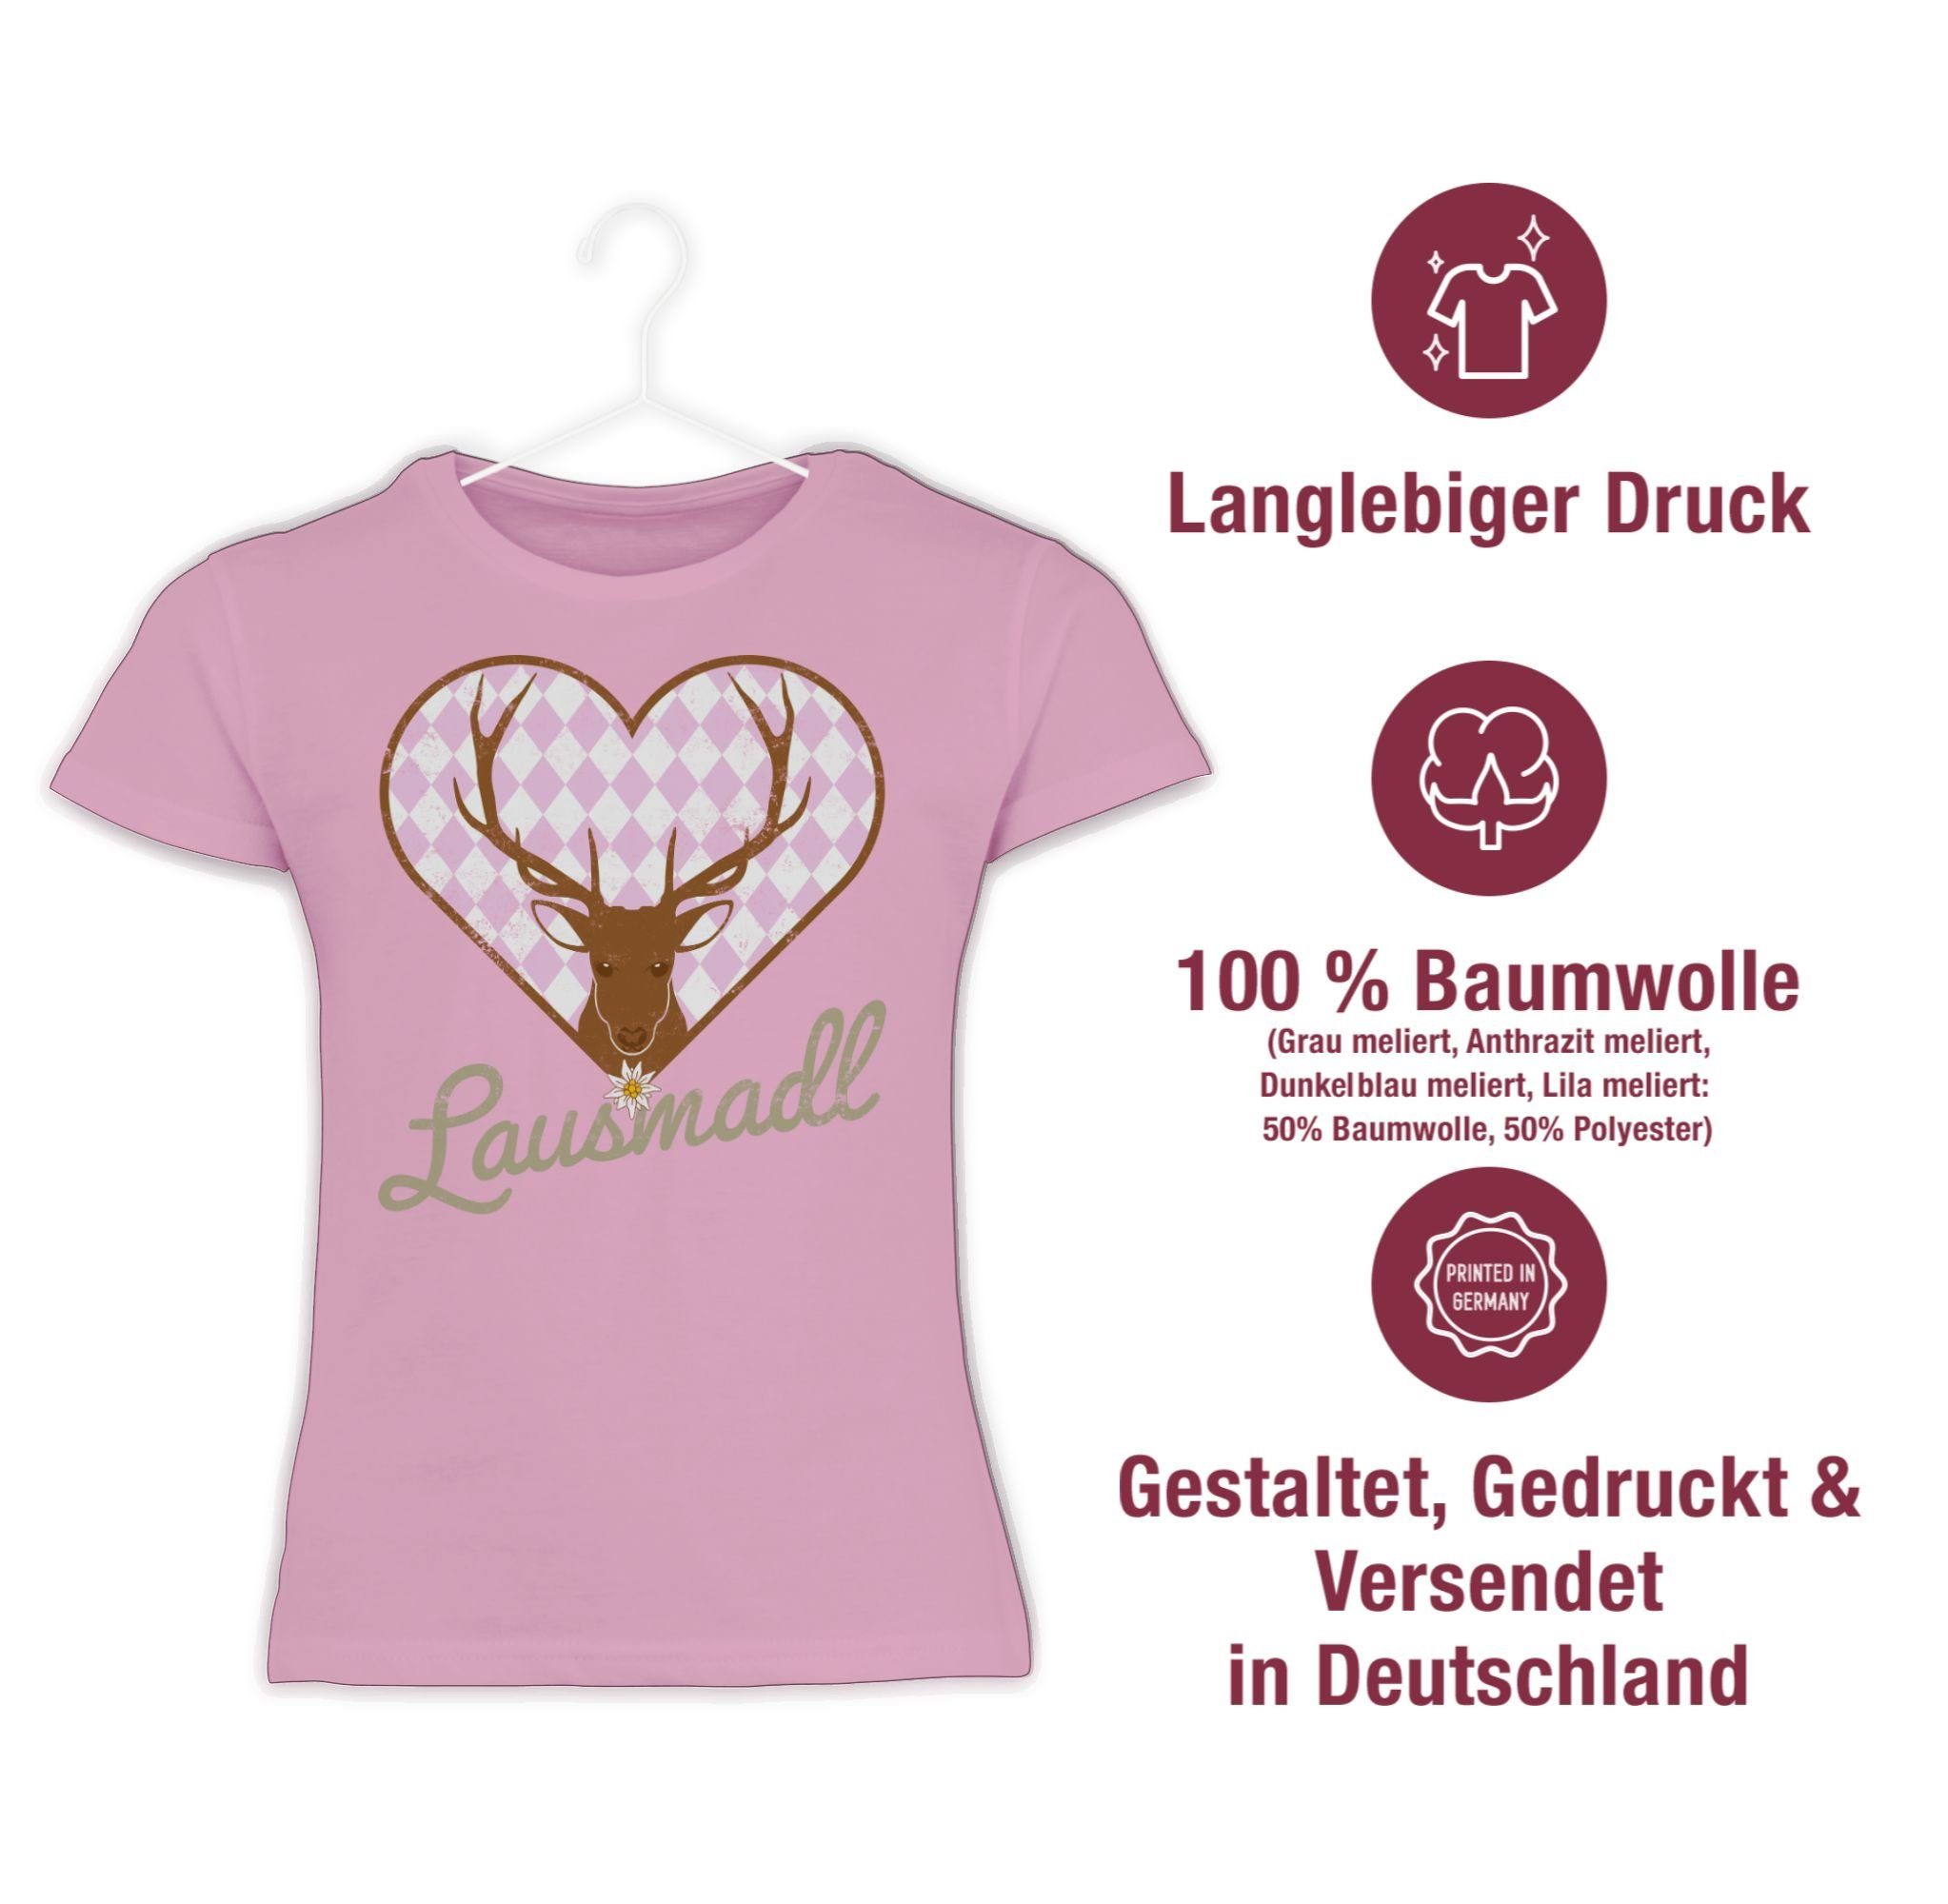 Shirtracer Hirsch für Rosa Lausmadl Mode Kinder T-Shirt 2 Outfit Oktoberfest